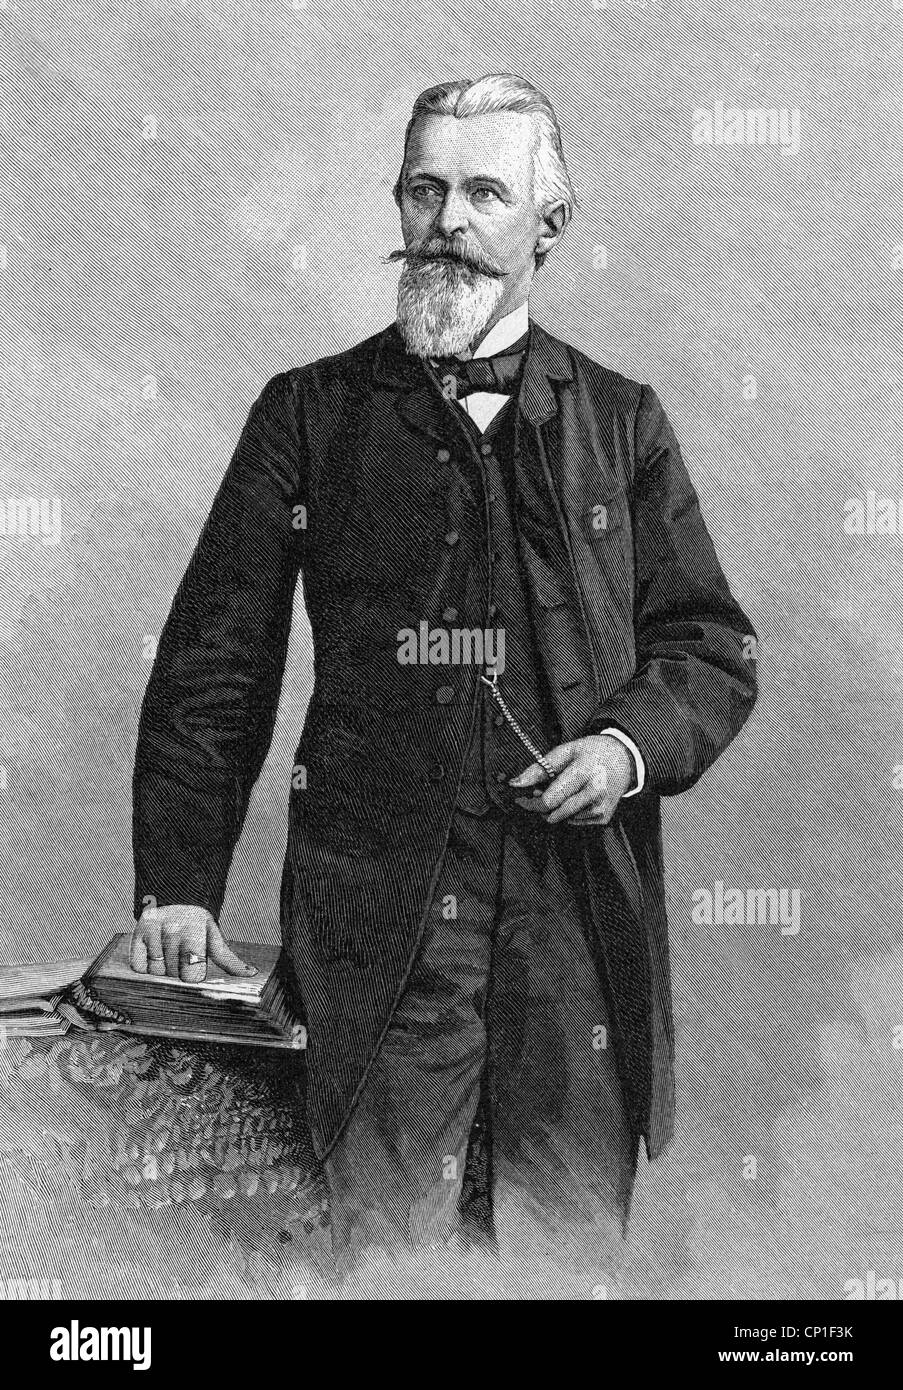 Zelle, Robert, 19.9.1829 - 25.1.1901, German politician, mayor of Berlin 1892 - 1898, half length, wood engraving after photography by J. G. Schaarwachter, Berlin, Stock Photo